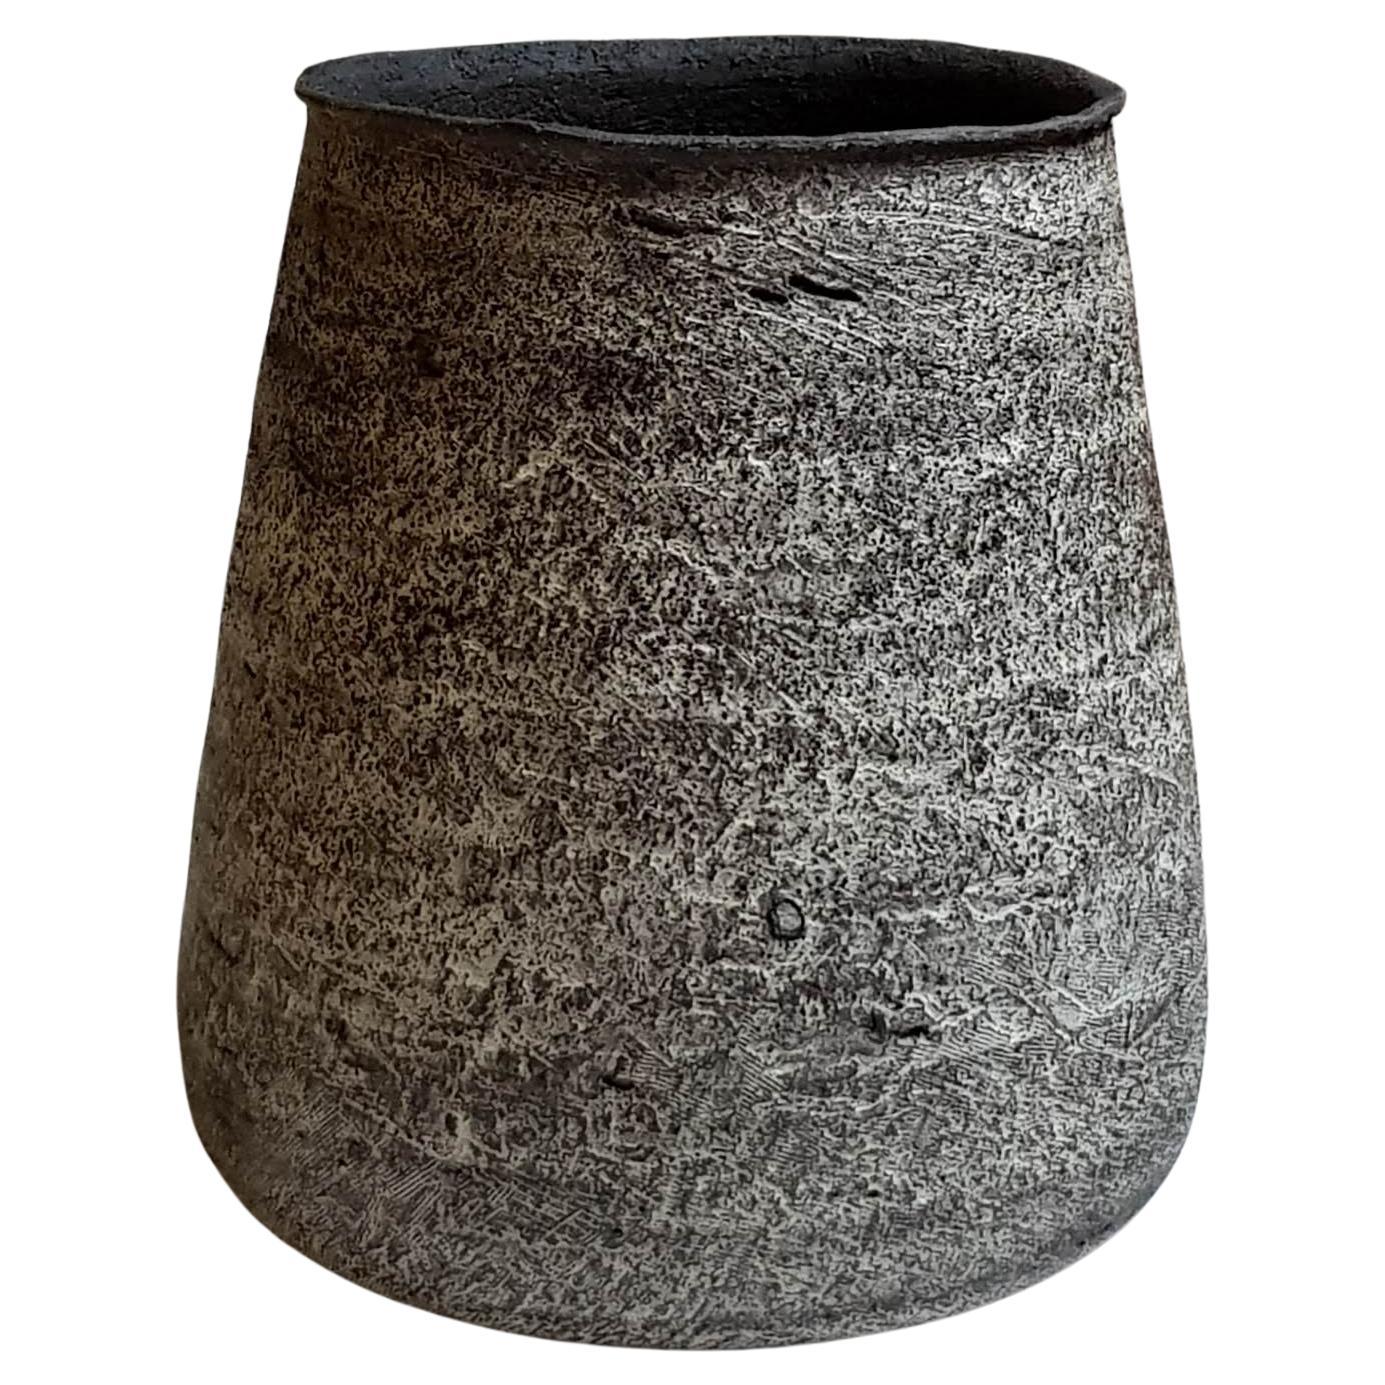 Kalathos-Vase aus schwarzem Steingut von Elena Vasilantonaki